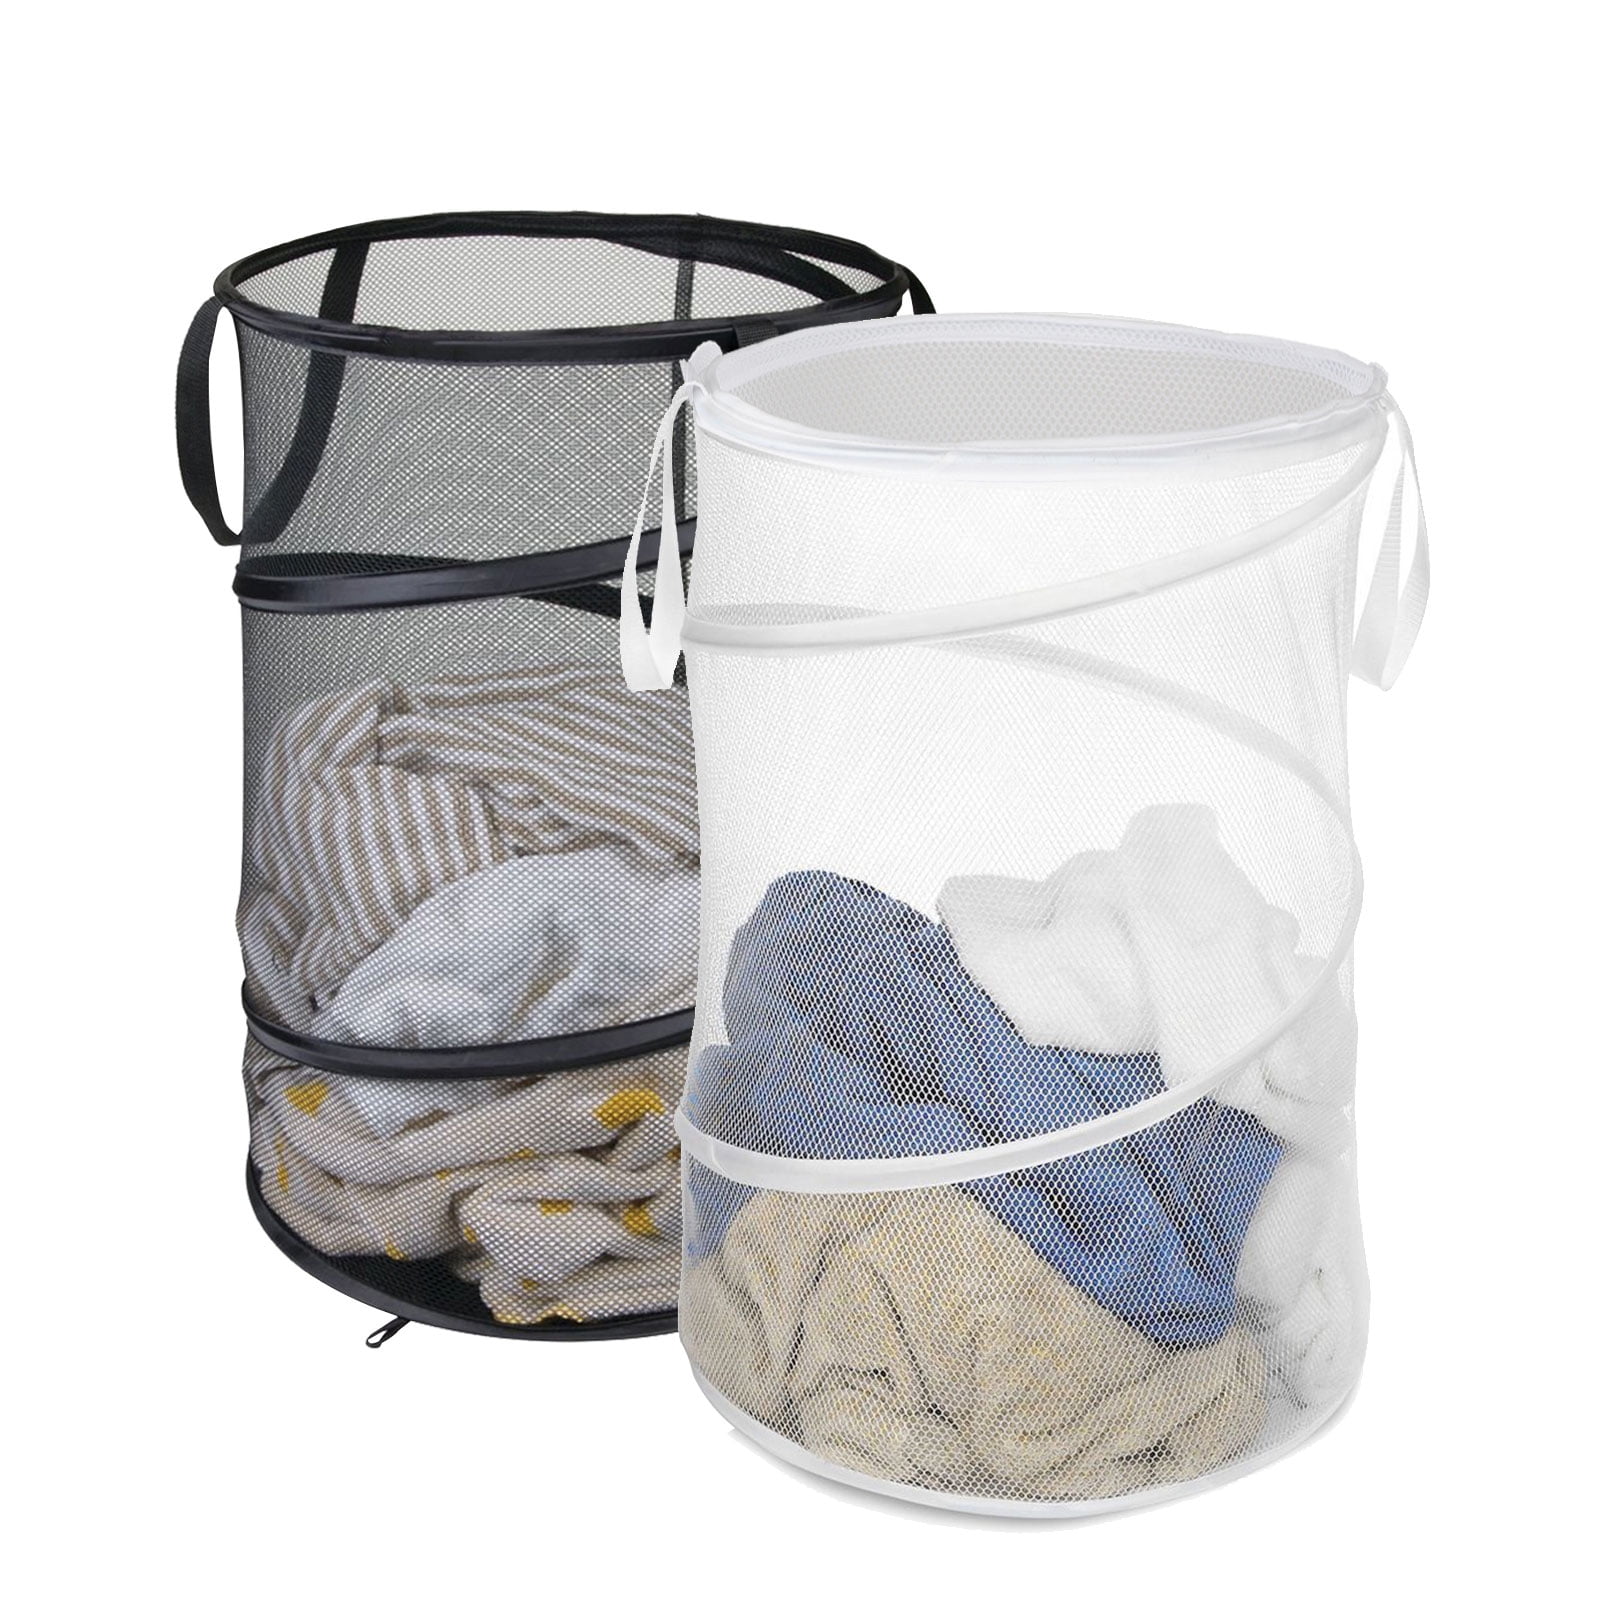 Details about   Kids Mesh Pop-Up Laundry Hamper Toy Storage Bin Folding Laundry Basket Handles 